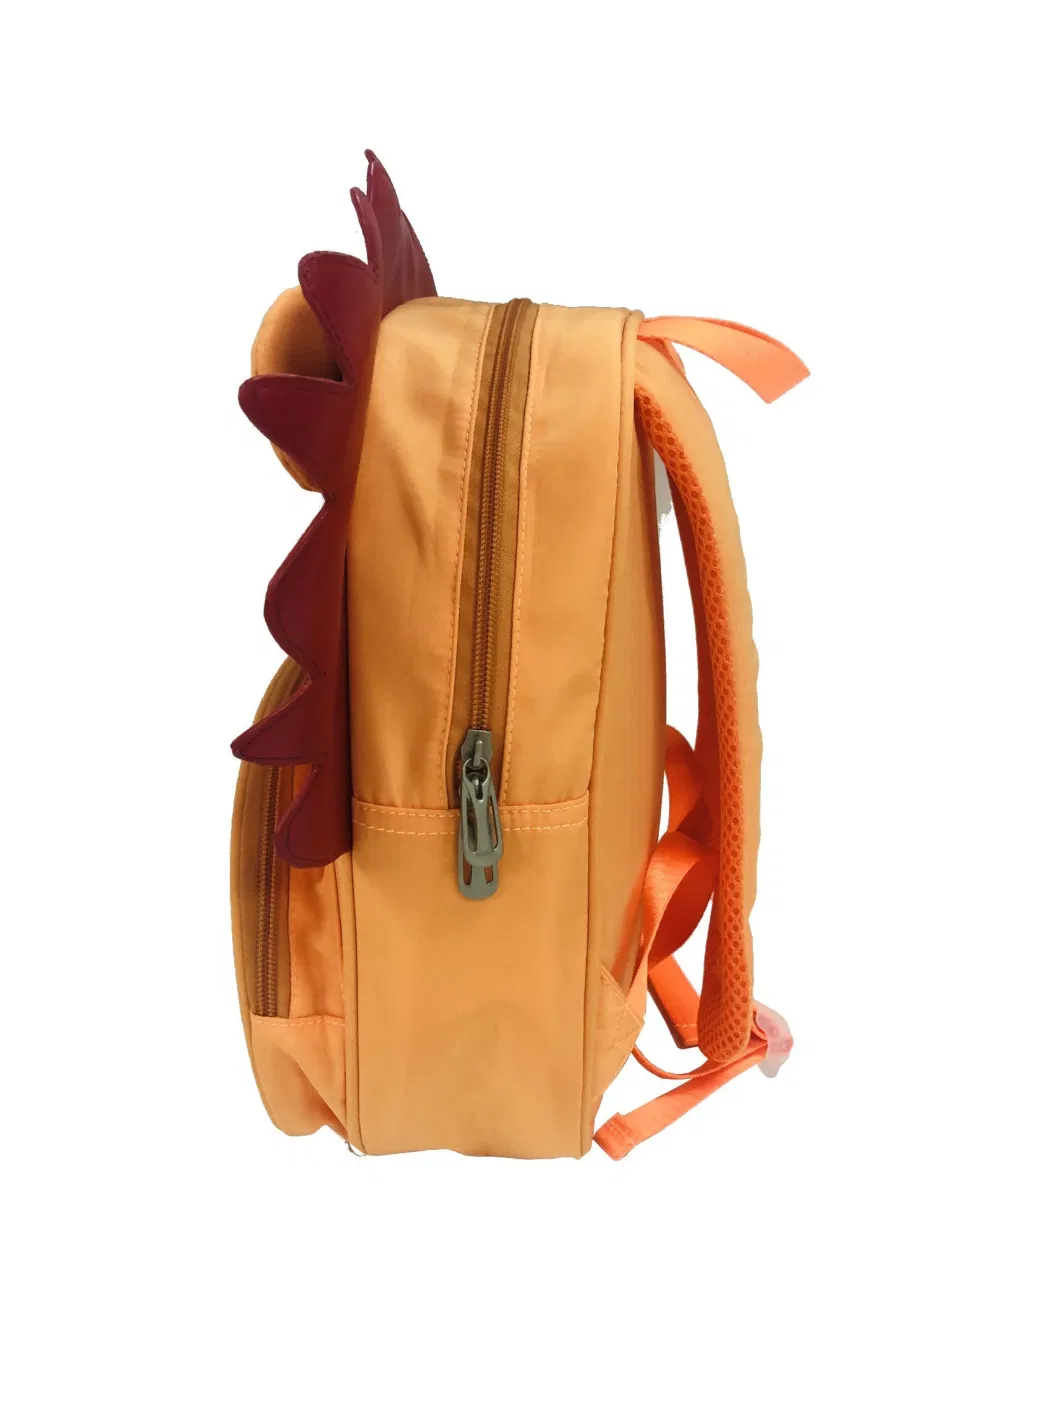 New Design Student Kids Small Animal Backpack School Bag for Girls Boys